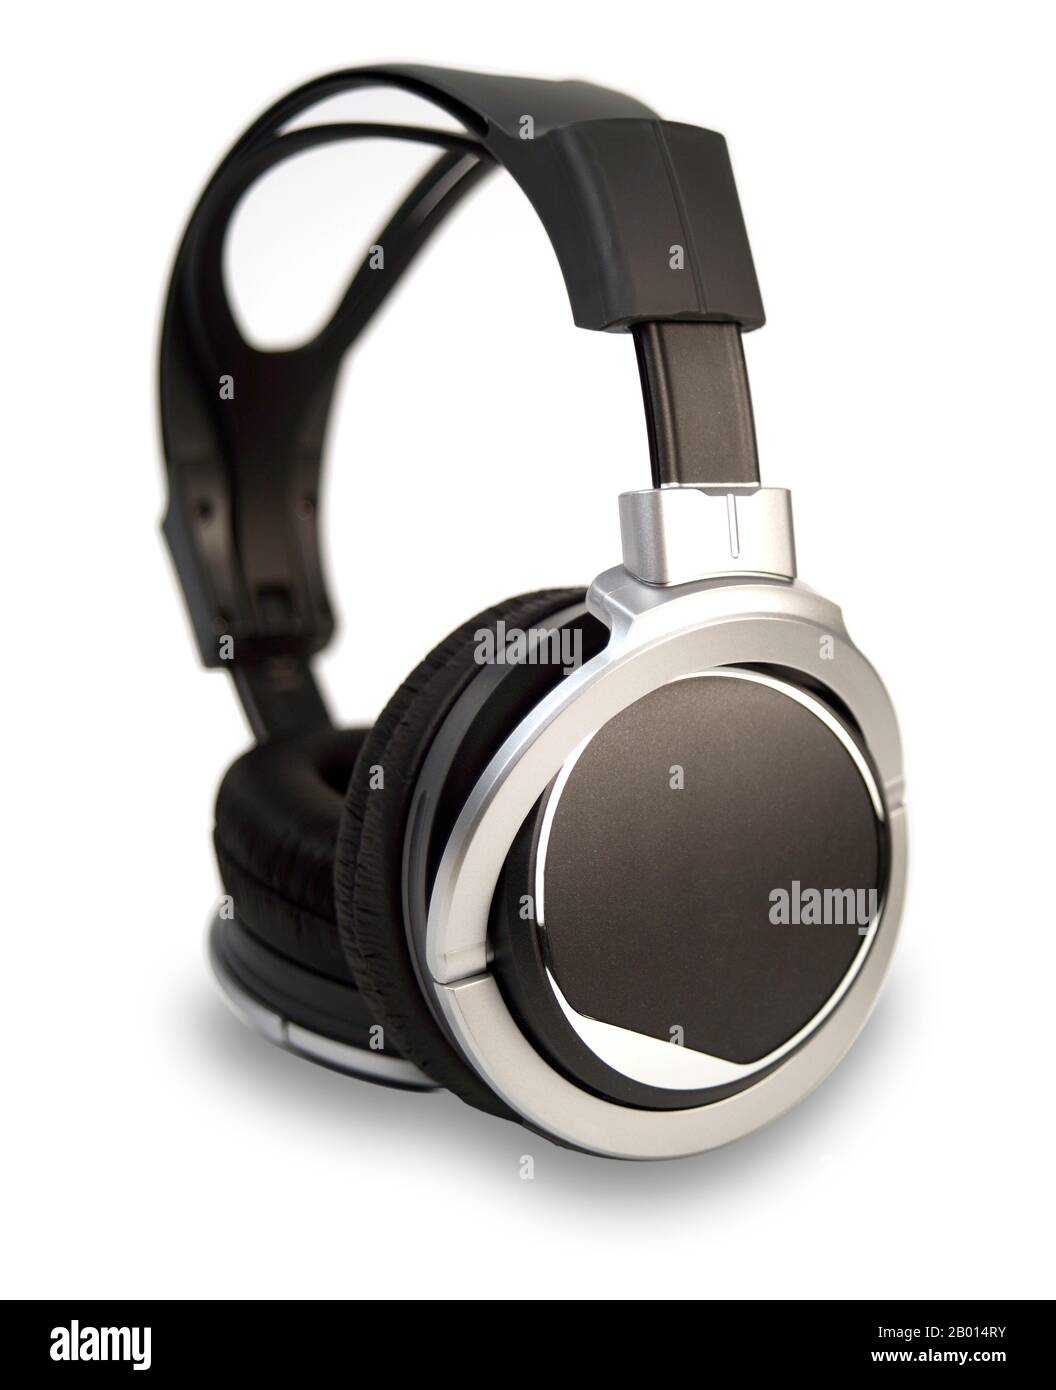 Retro headphones isolated on white background Stock Photo - Alamy